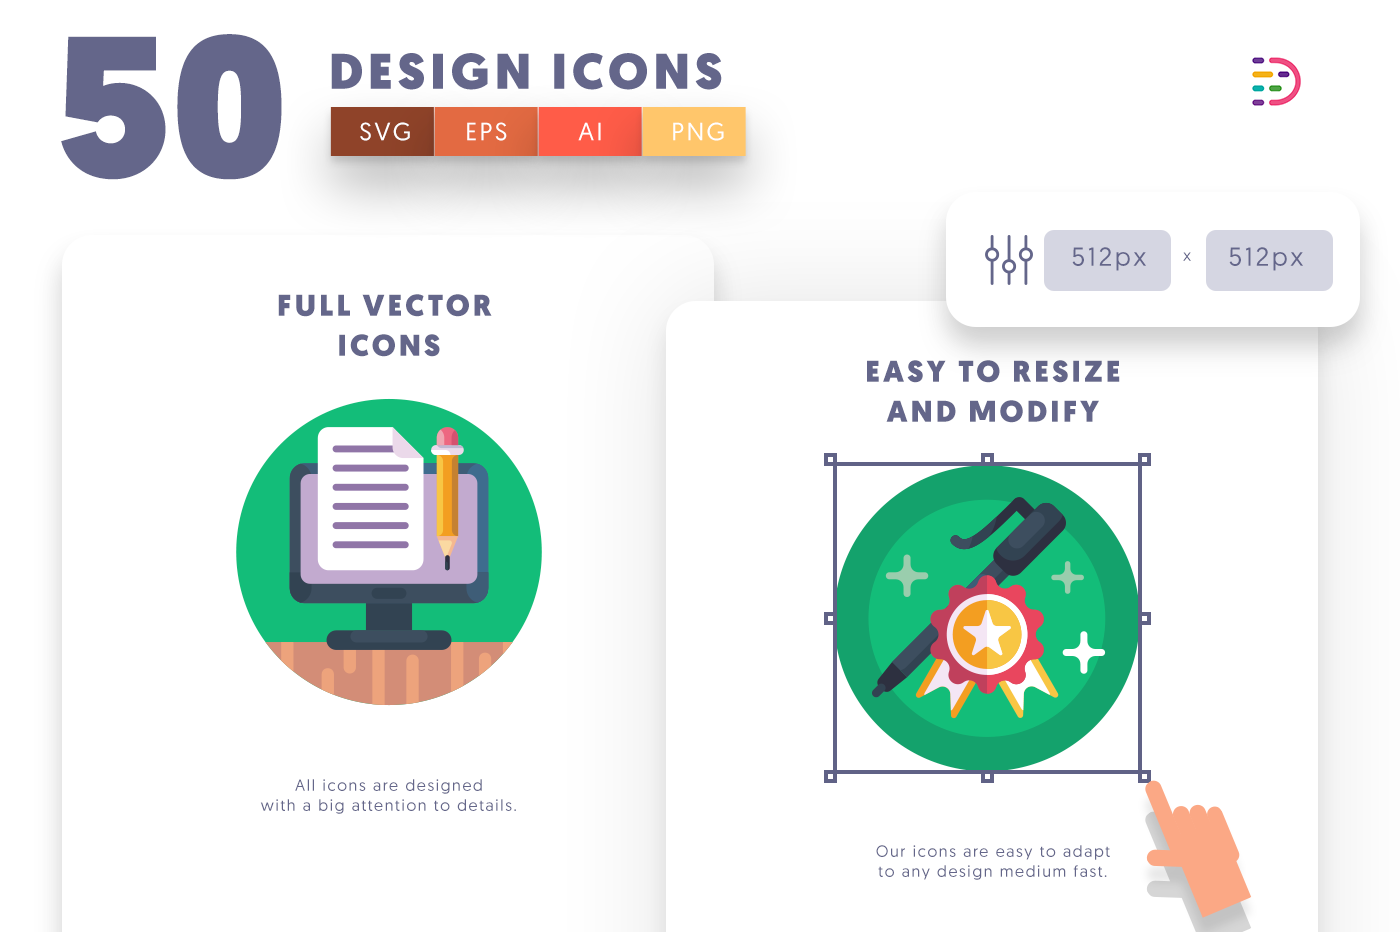 Full vector Design Icons